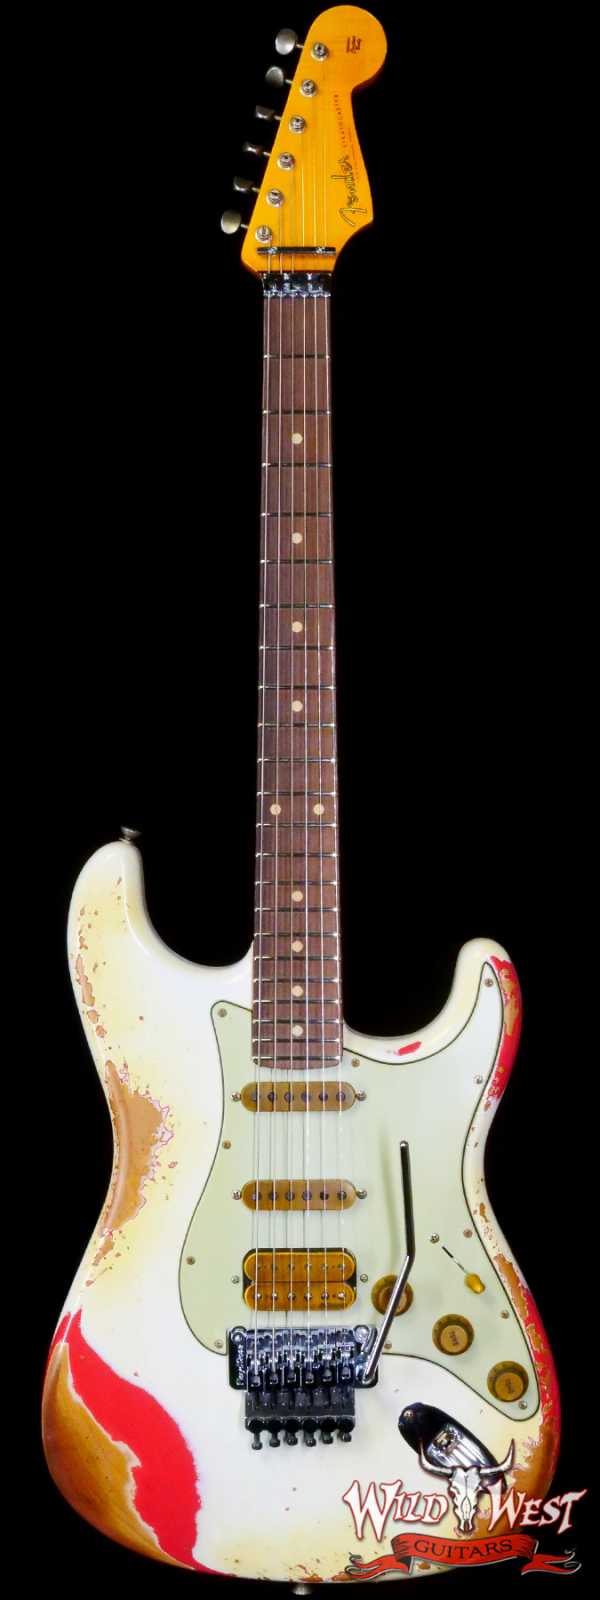 Fender Custom Shop Wild West White Lightning Stratocaster HSS Floyd Rose Rosewood Board 22 Frets Heavy Relic Fiesta Red